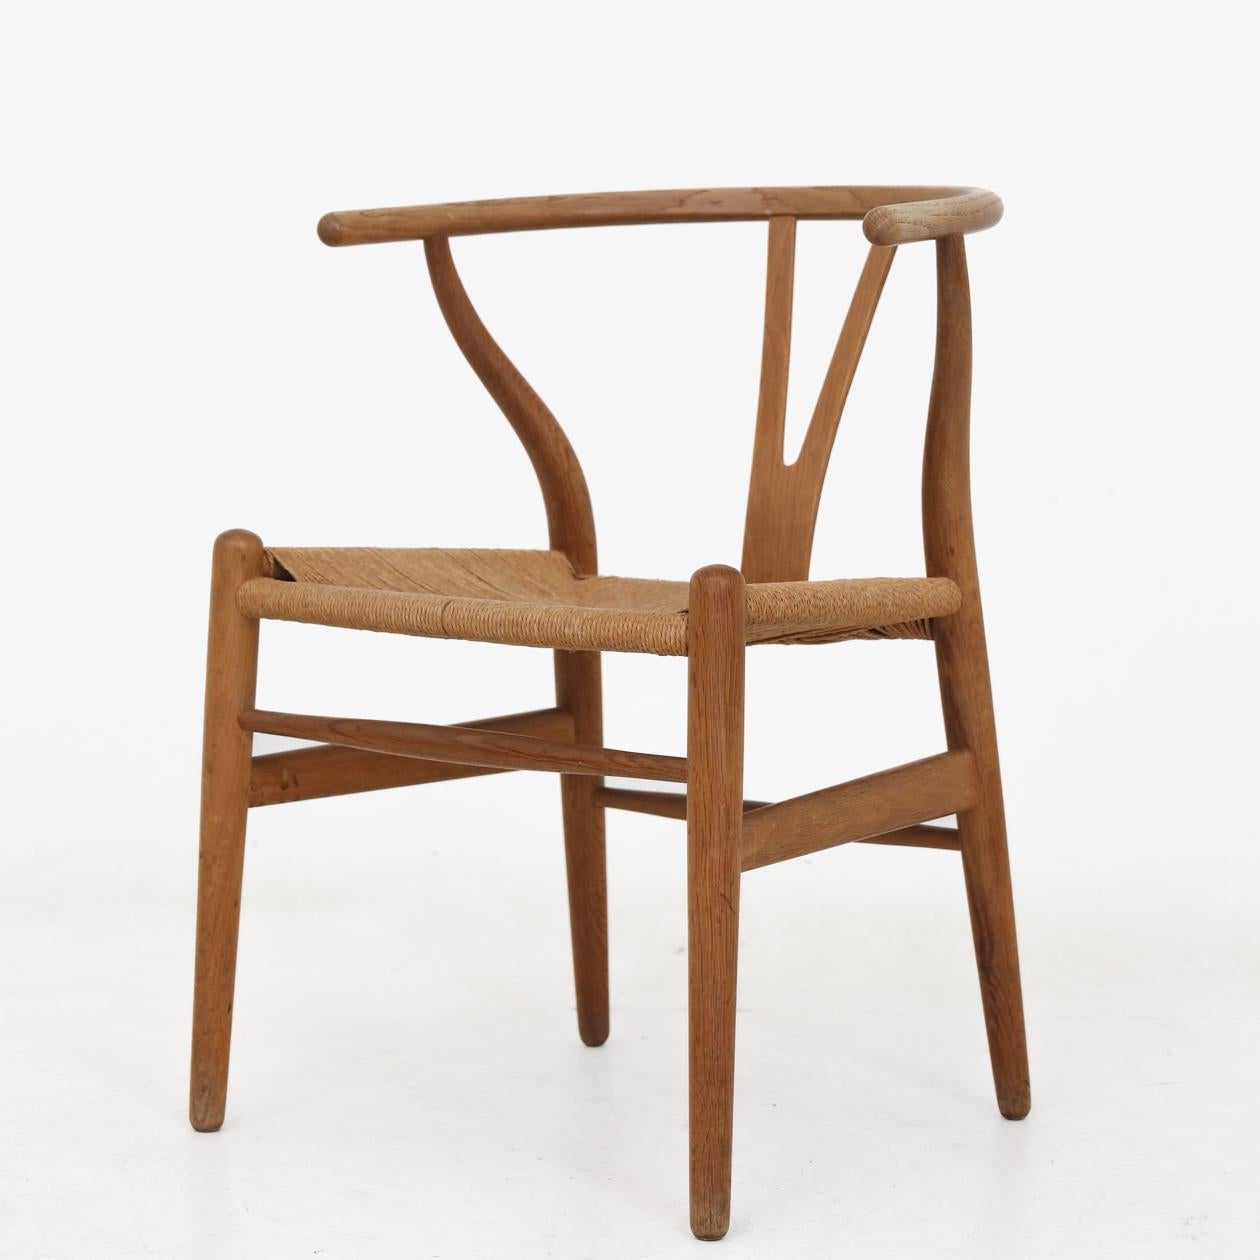 Set of six CH 24 - The Wishbone chairs patinated oak and braided paper cord. Hans J. Wegner / Carl Hansen